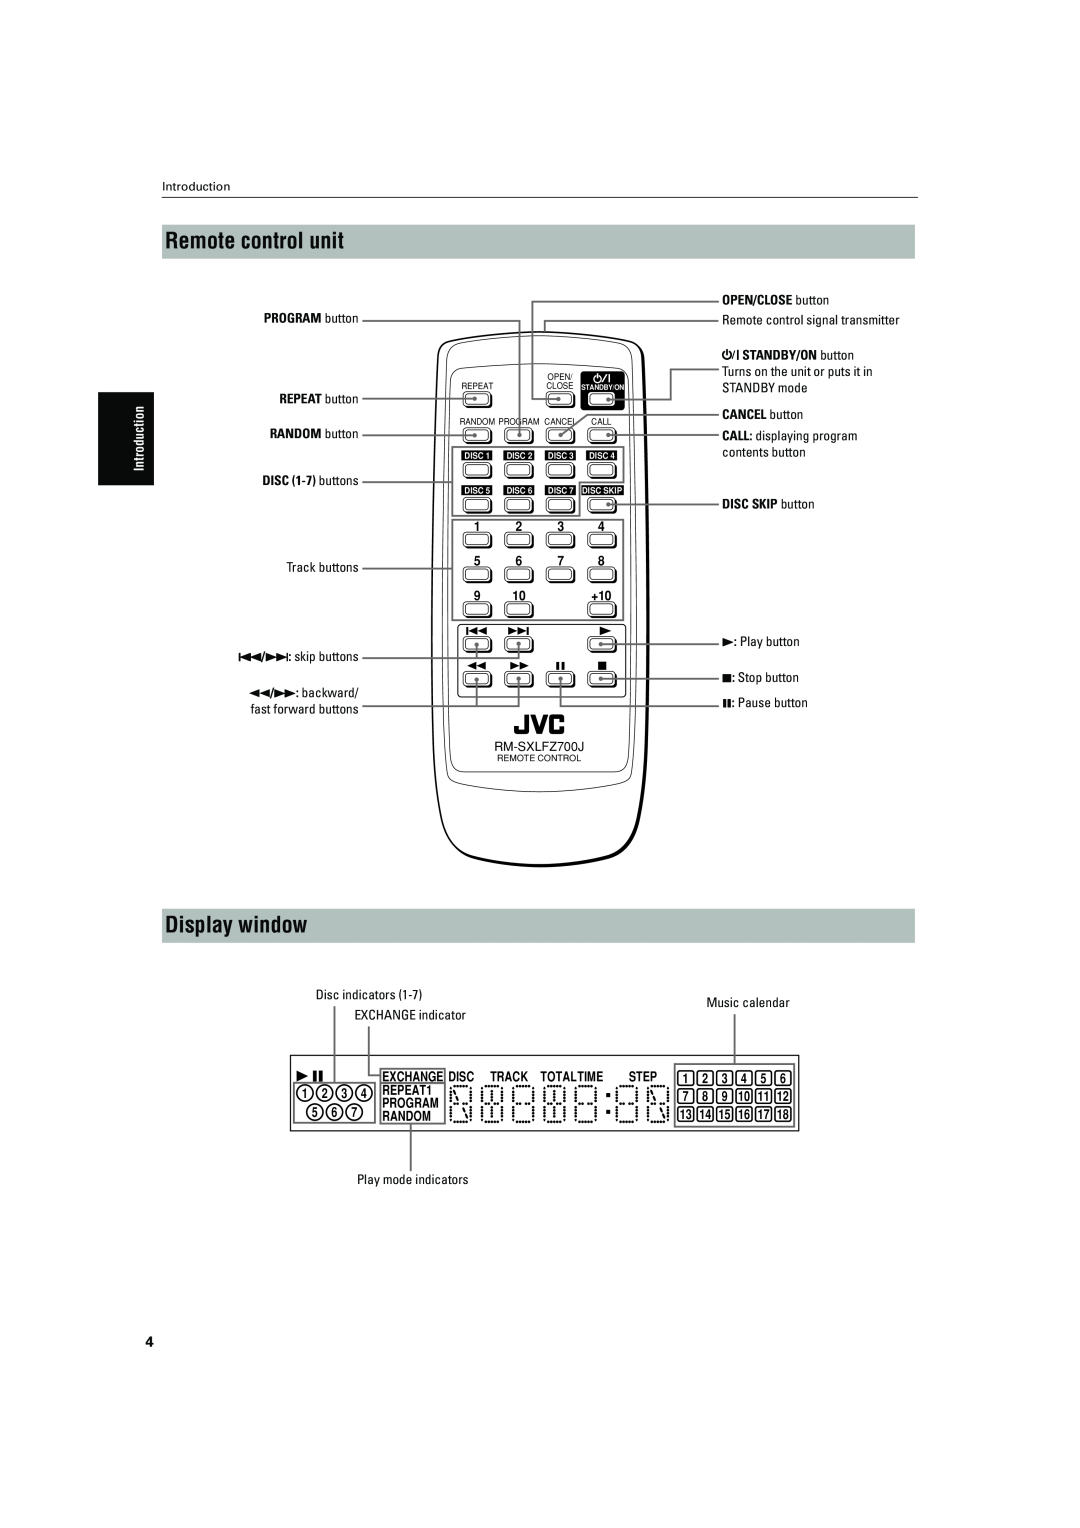 JVC XL-FZ700 Remote control unit, Display window, Introduction, PROGRAM button REPEAT button RANDOM button, CANCEL button 